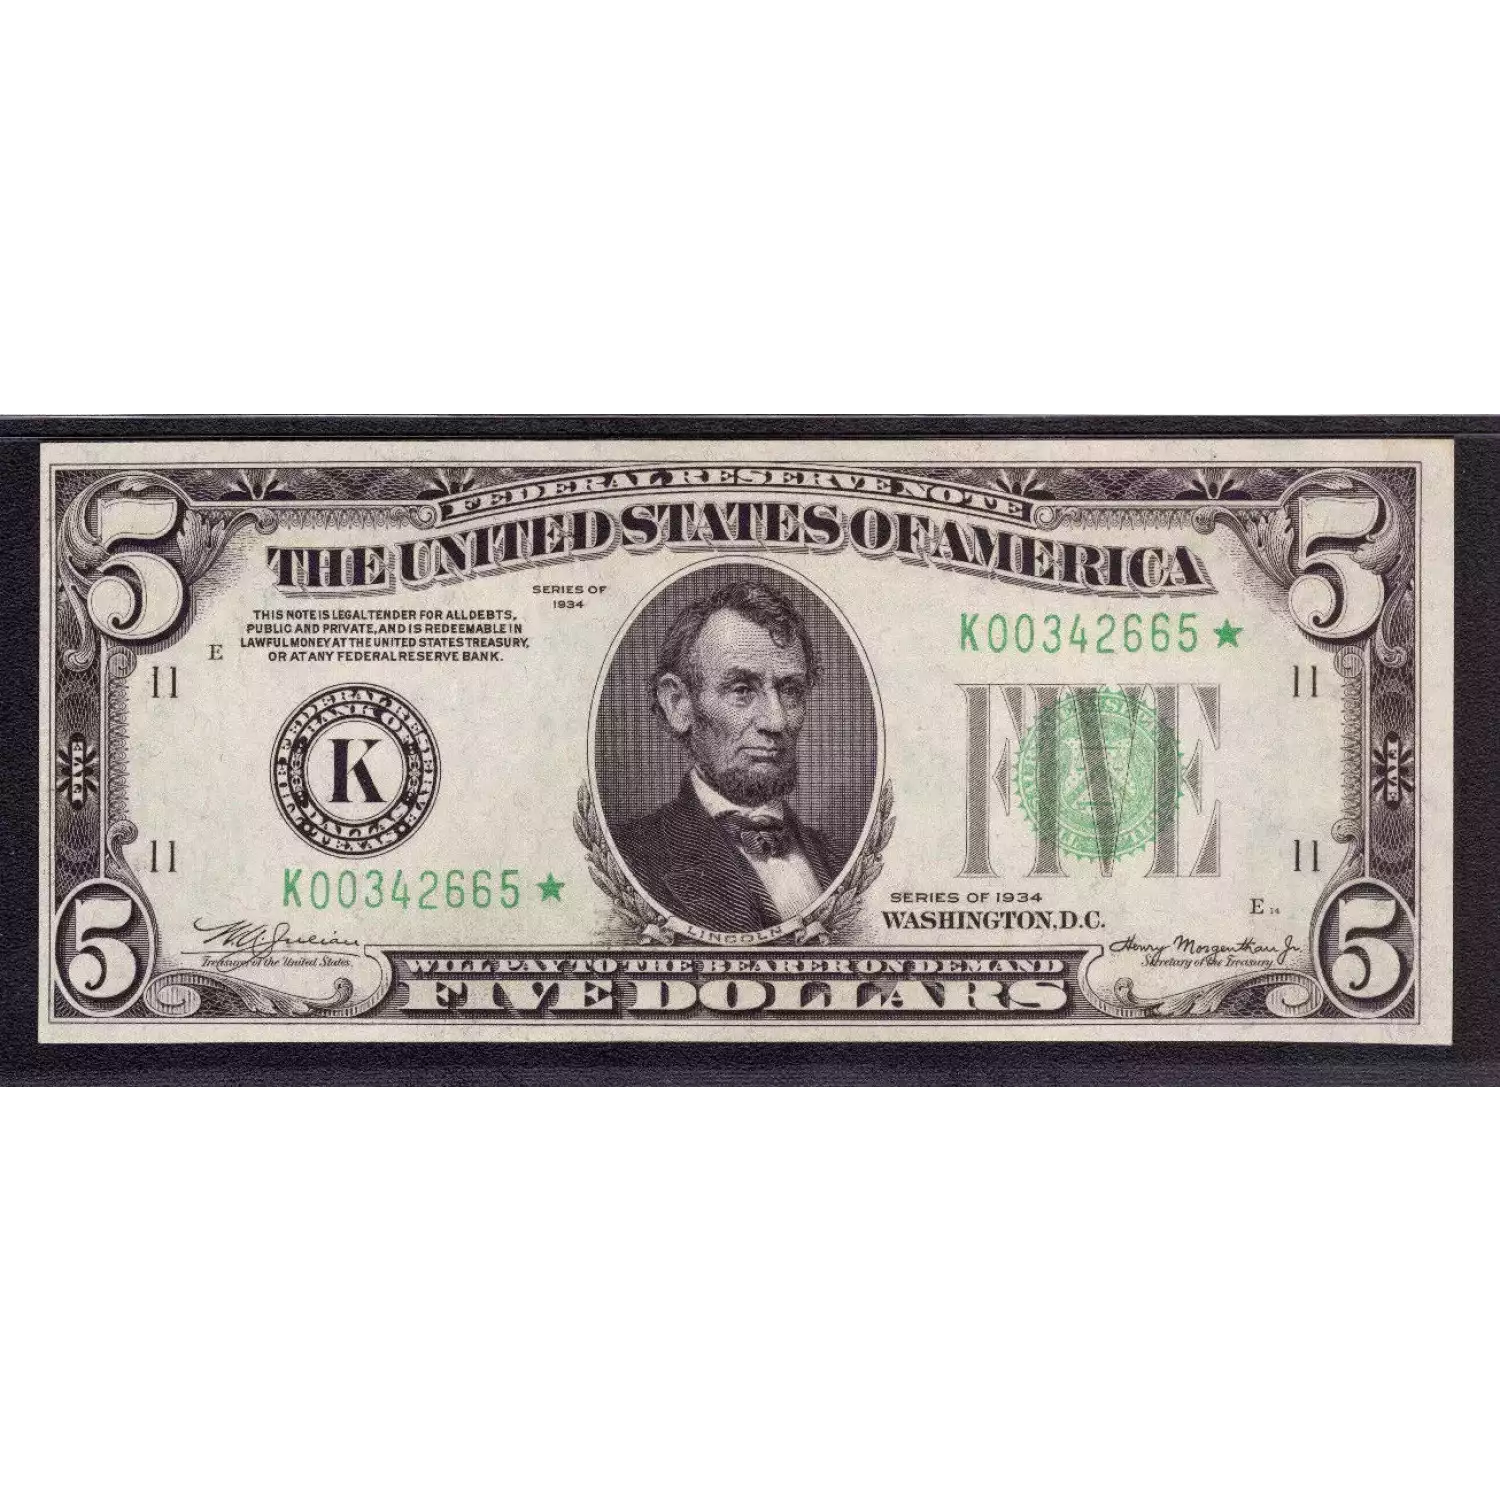 Federal Reserve Note Dallas